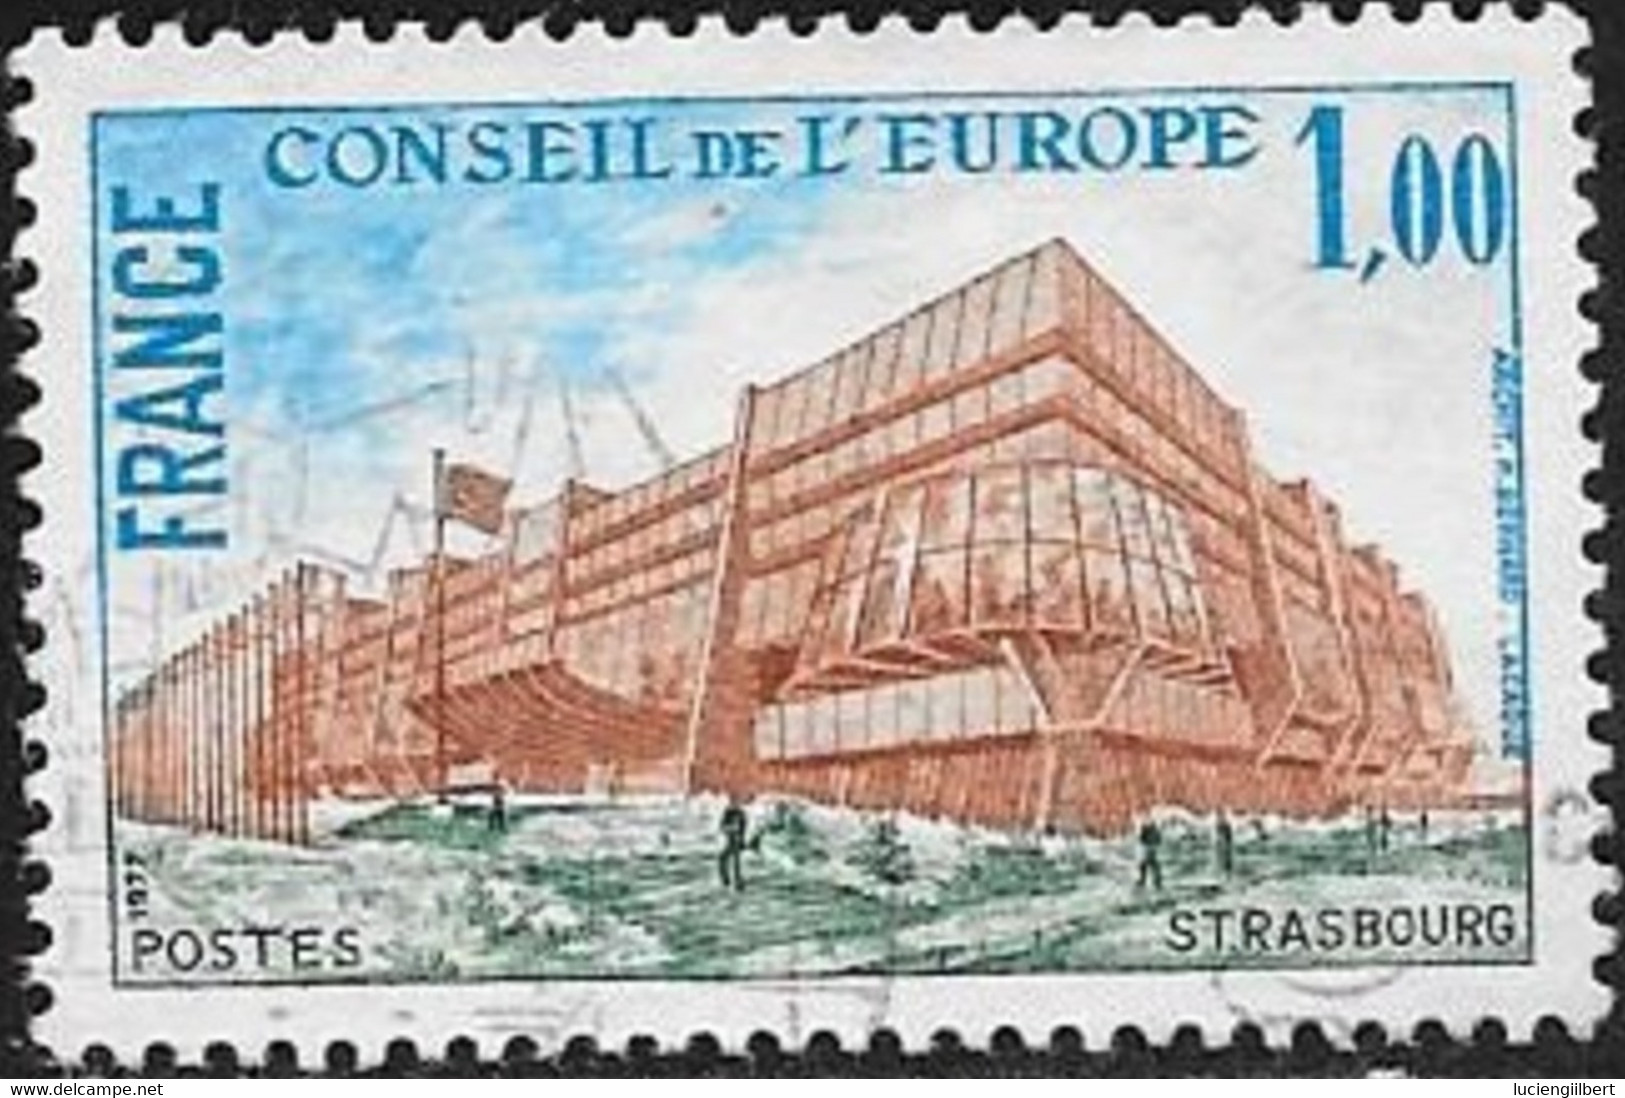 N°  54   FRANCE  -  CONSEIL DE L'EUROPE  - OBLITERE  -  1977 - - Used